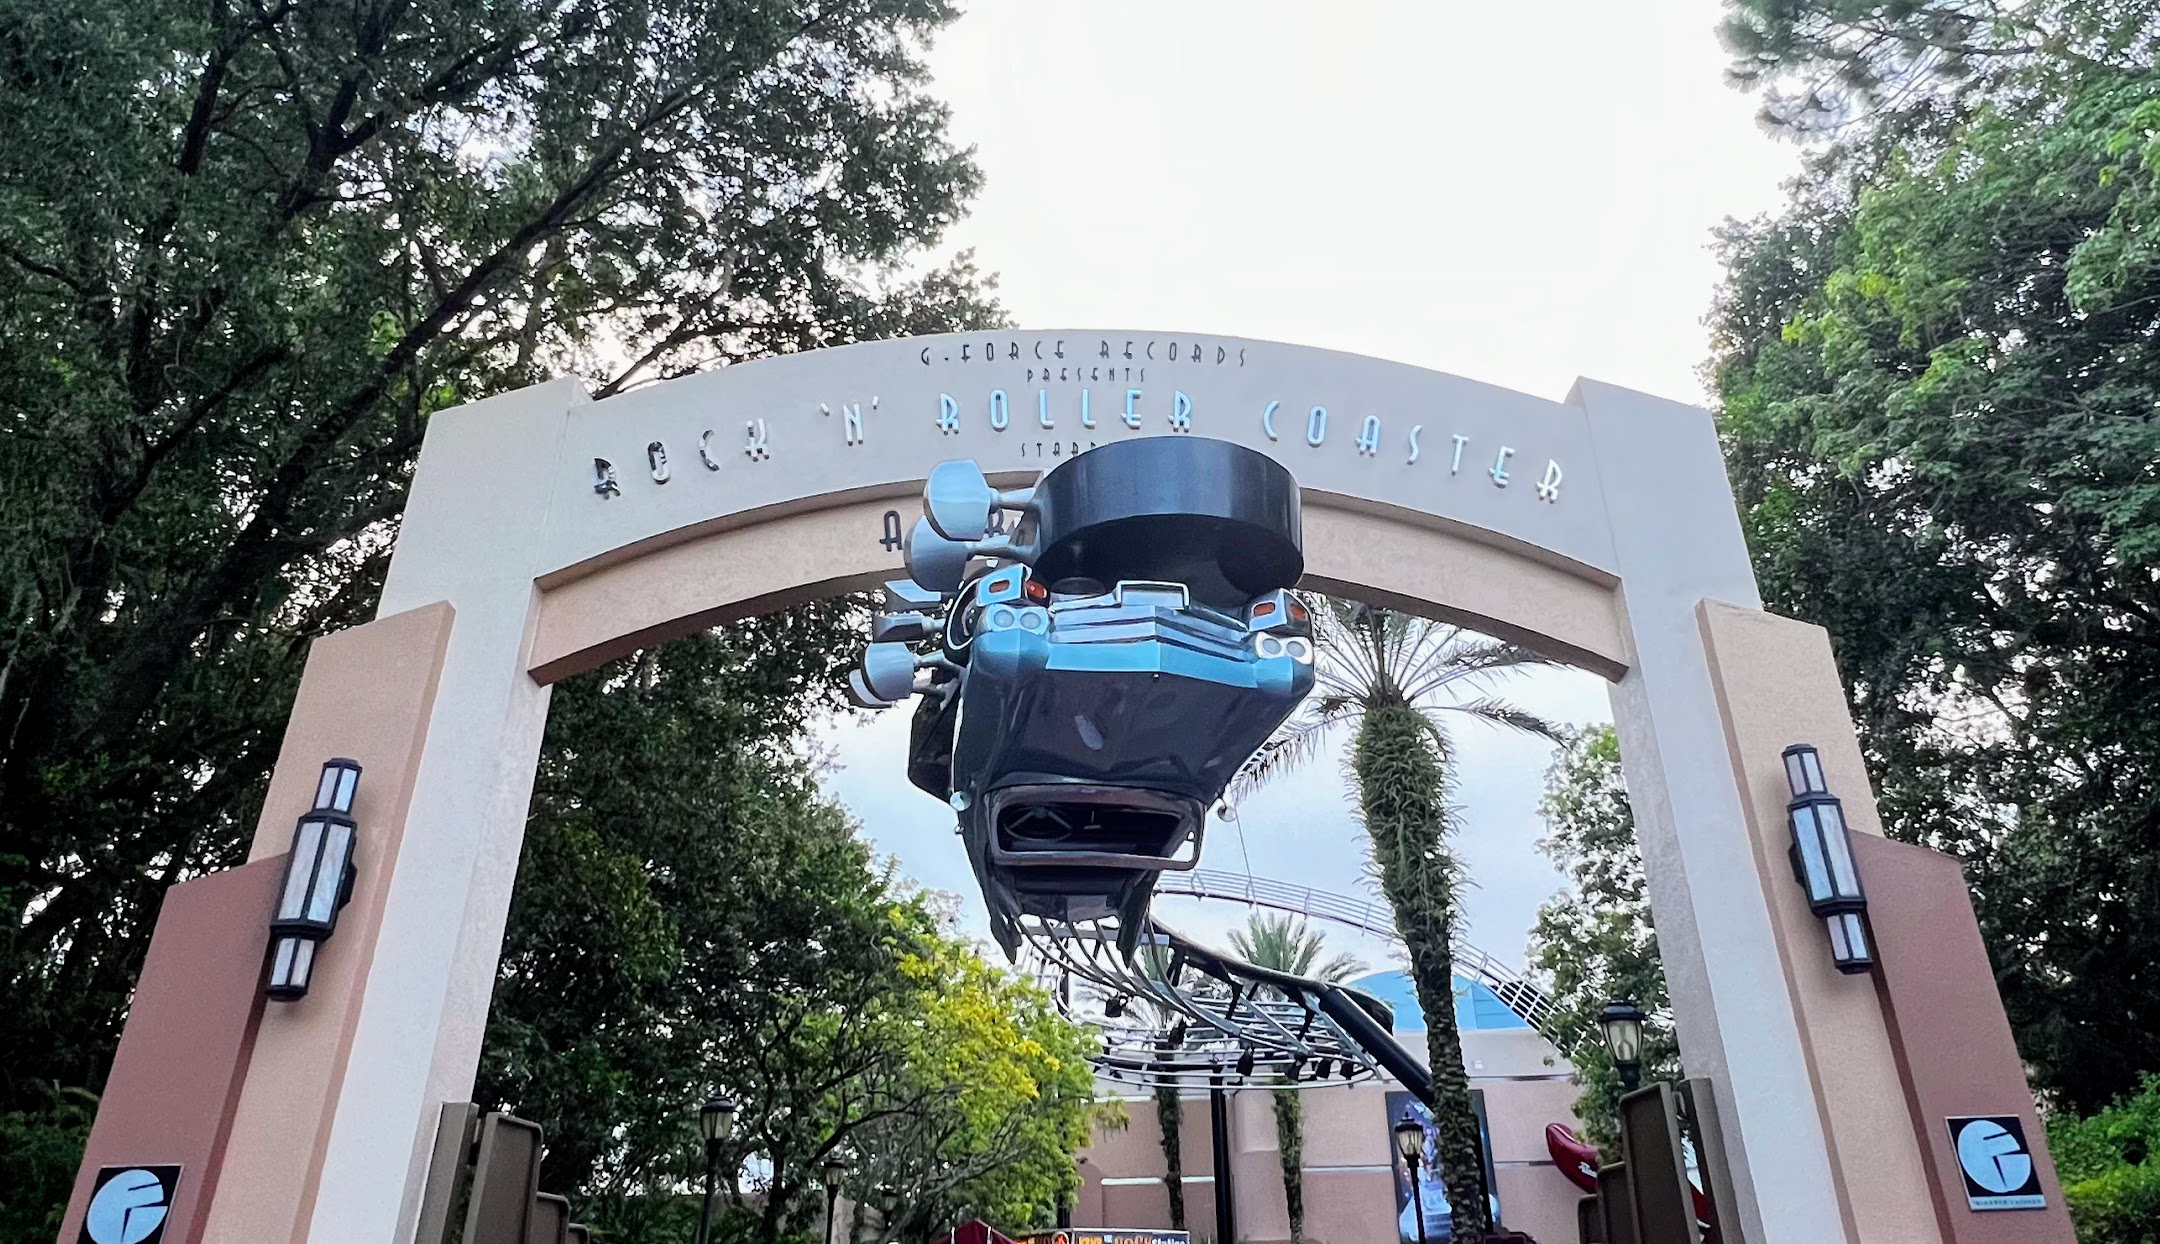 Rock 'n' Roller Coaster starring Aerosmith - Disney's Hollywood Studios